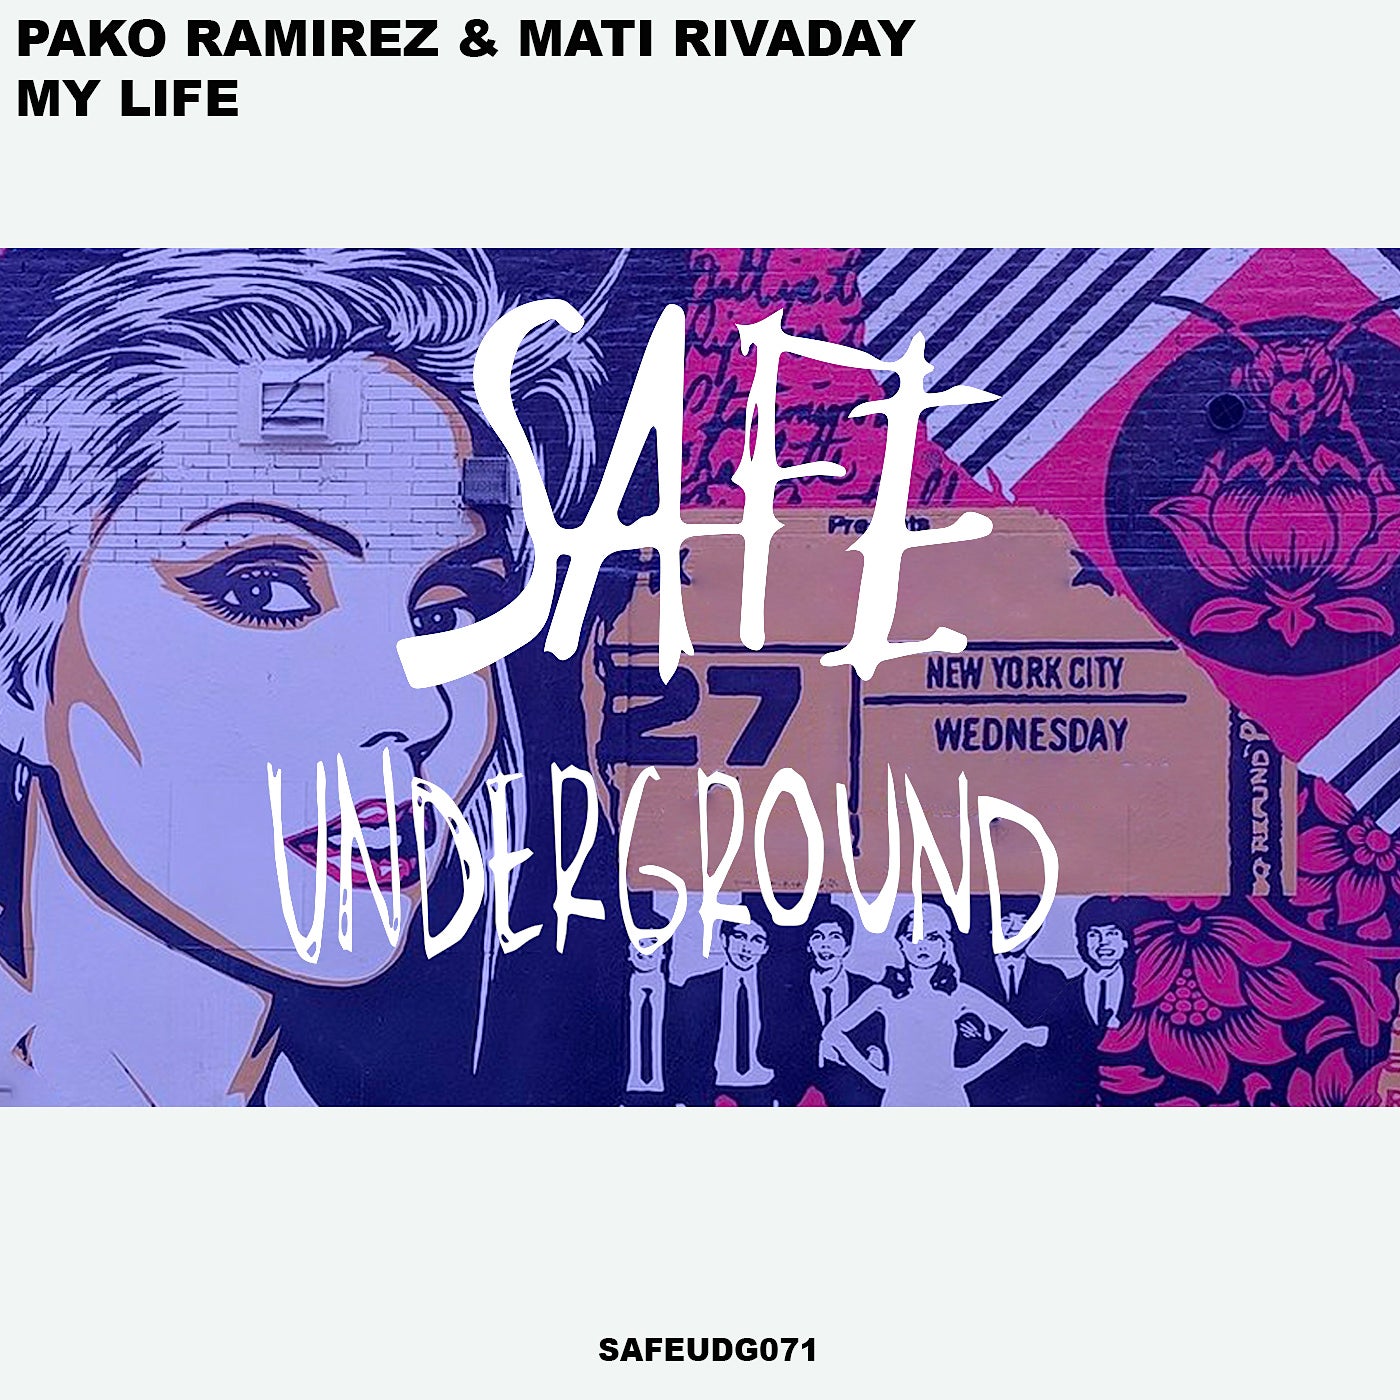 MATI Rivaday, Pako Ramirez – My Life EP [SAFEUDG071]